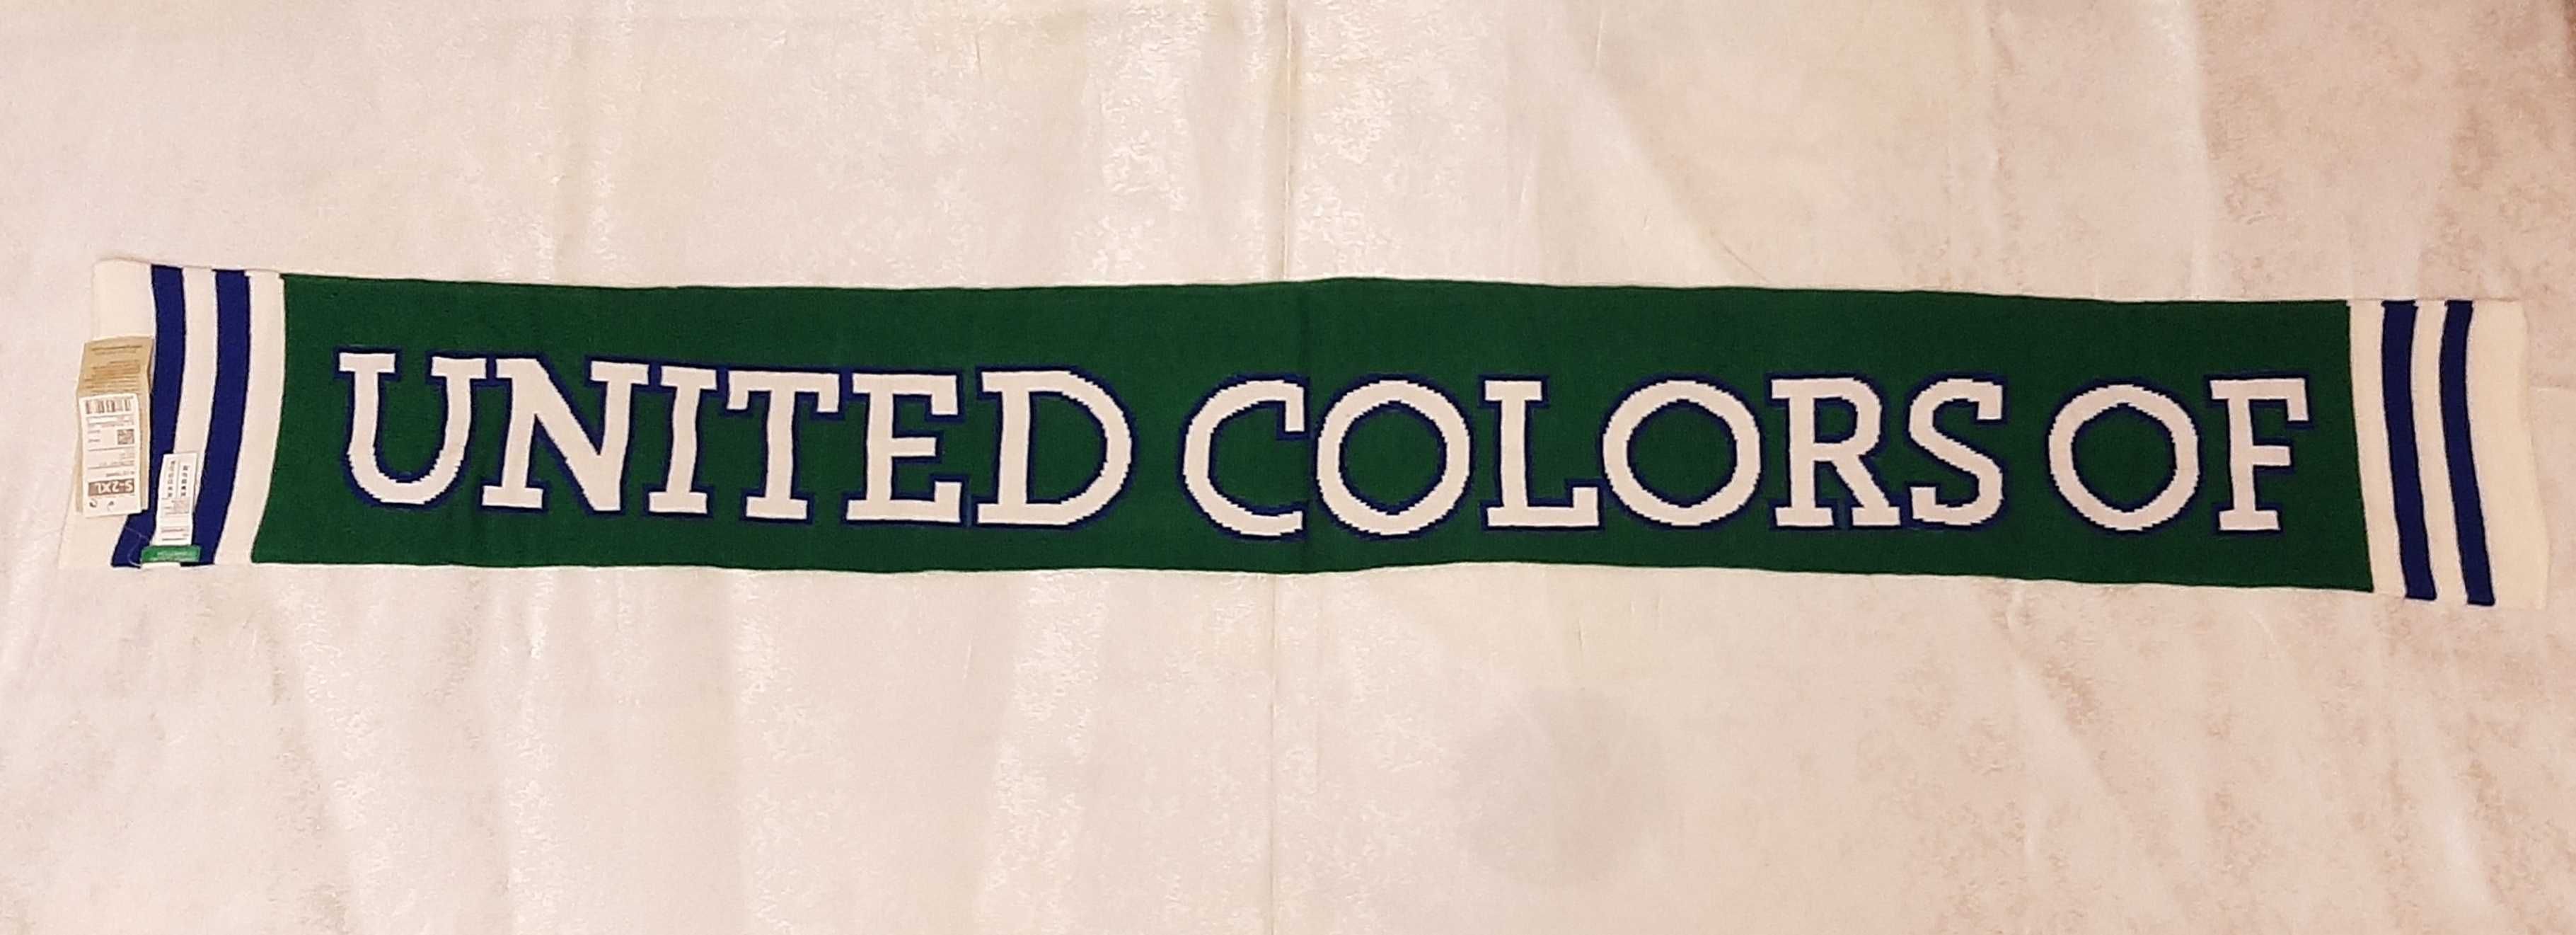 Fular United Colors of Benetton